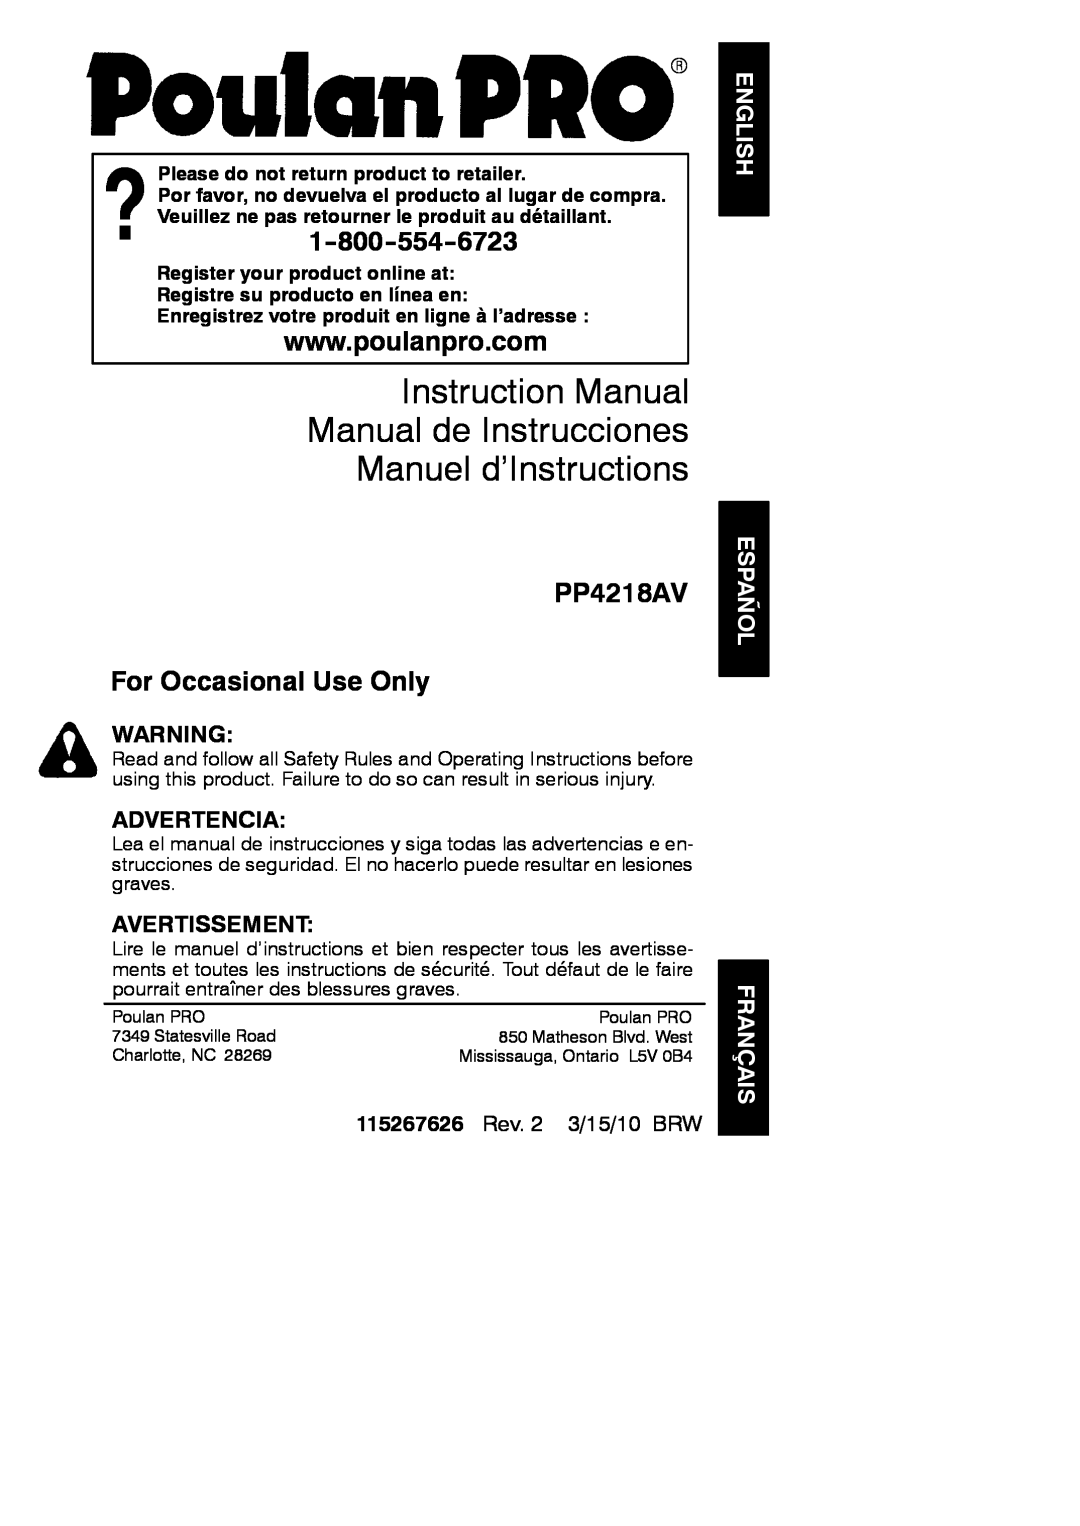 Poulan 966513901 instruction manual English, Español Français, Manuel d’Instructions, PP4218AV For Occasional Use Only 